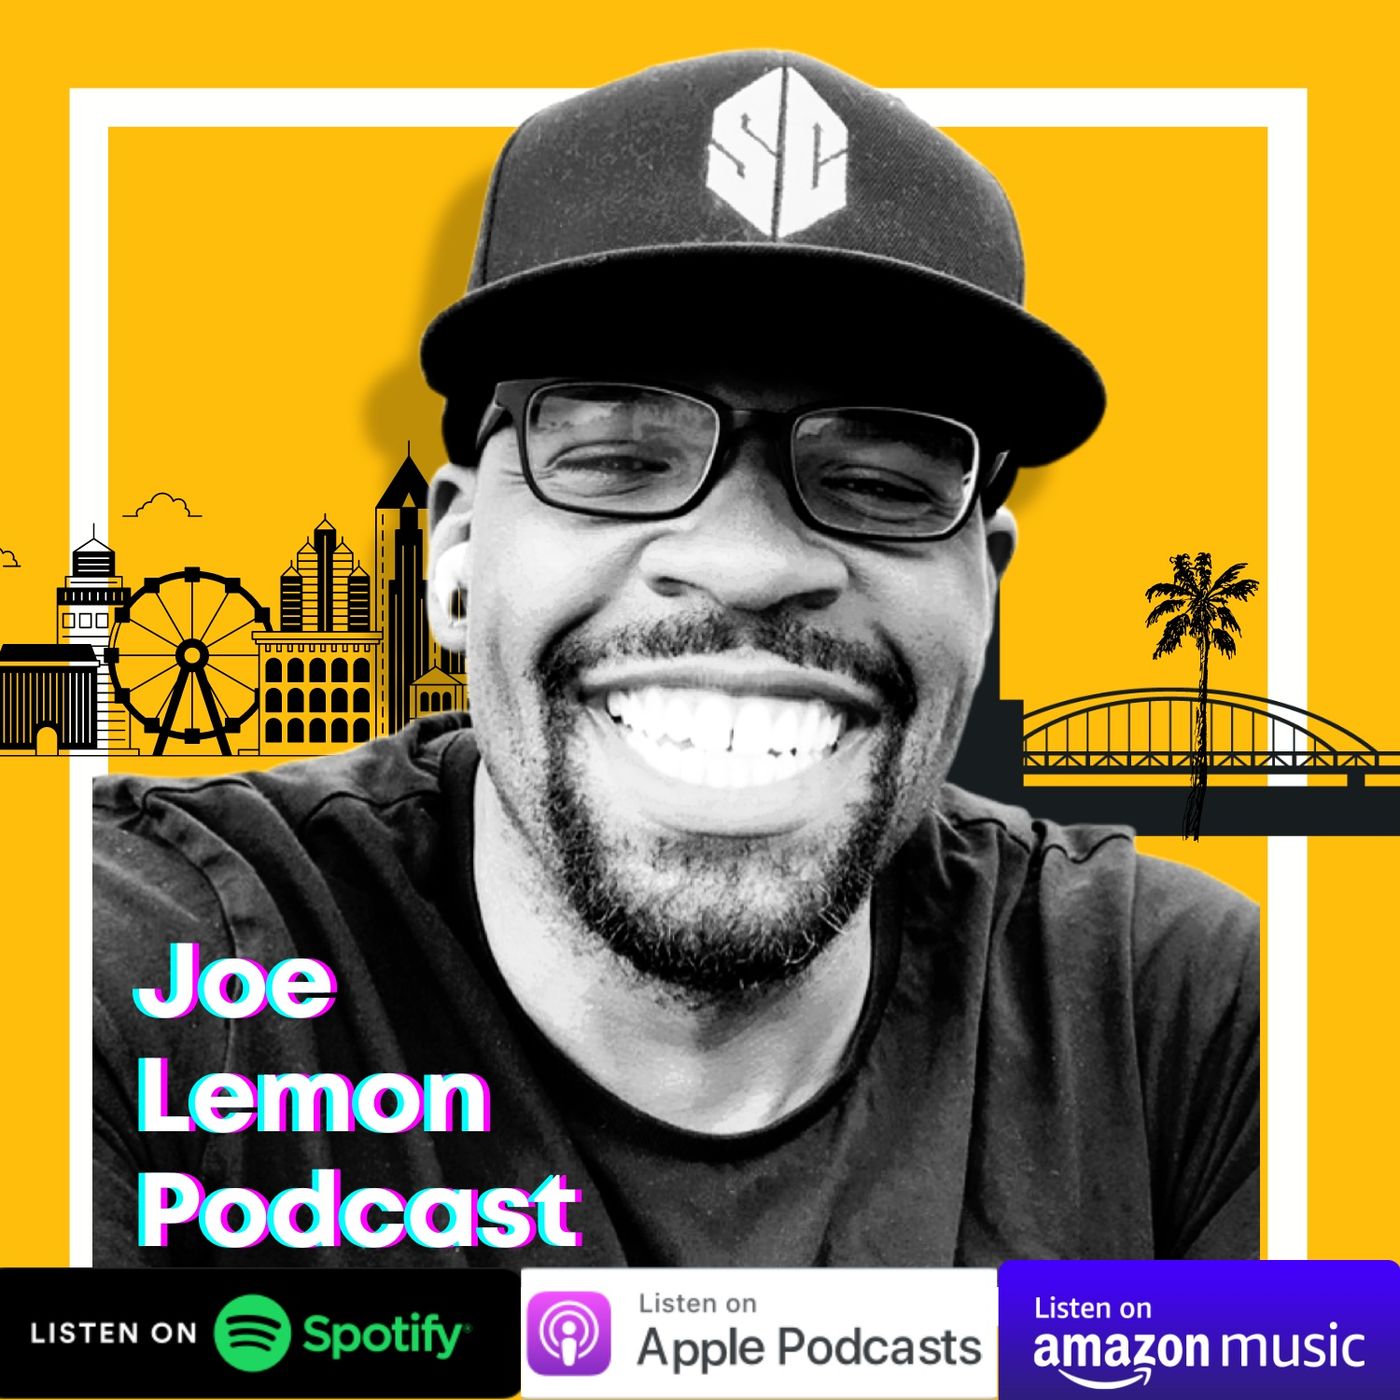 The Joe Lemon Podcast